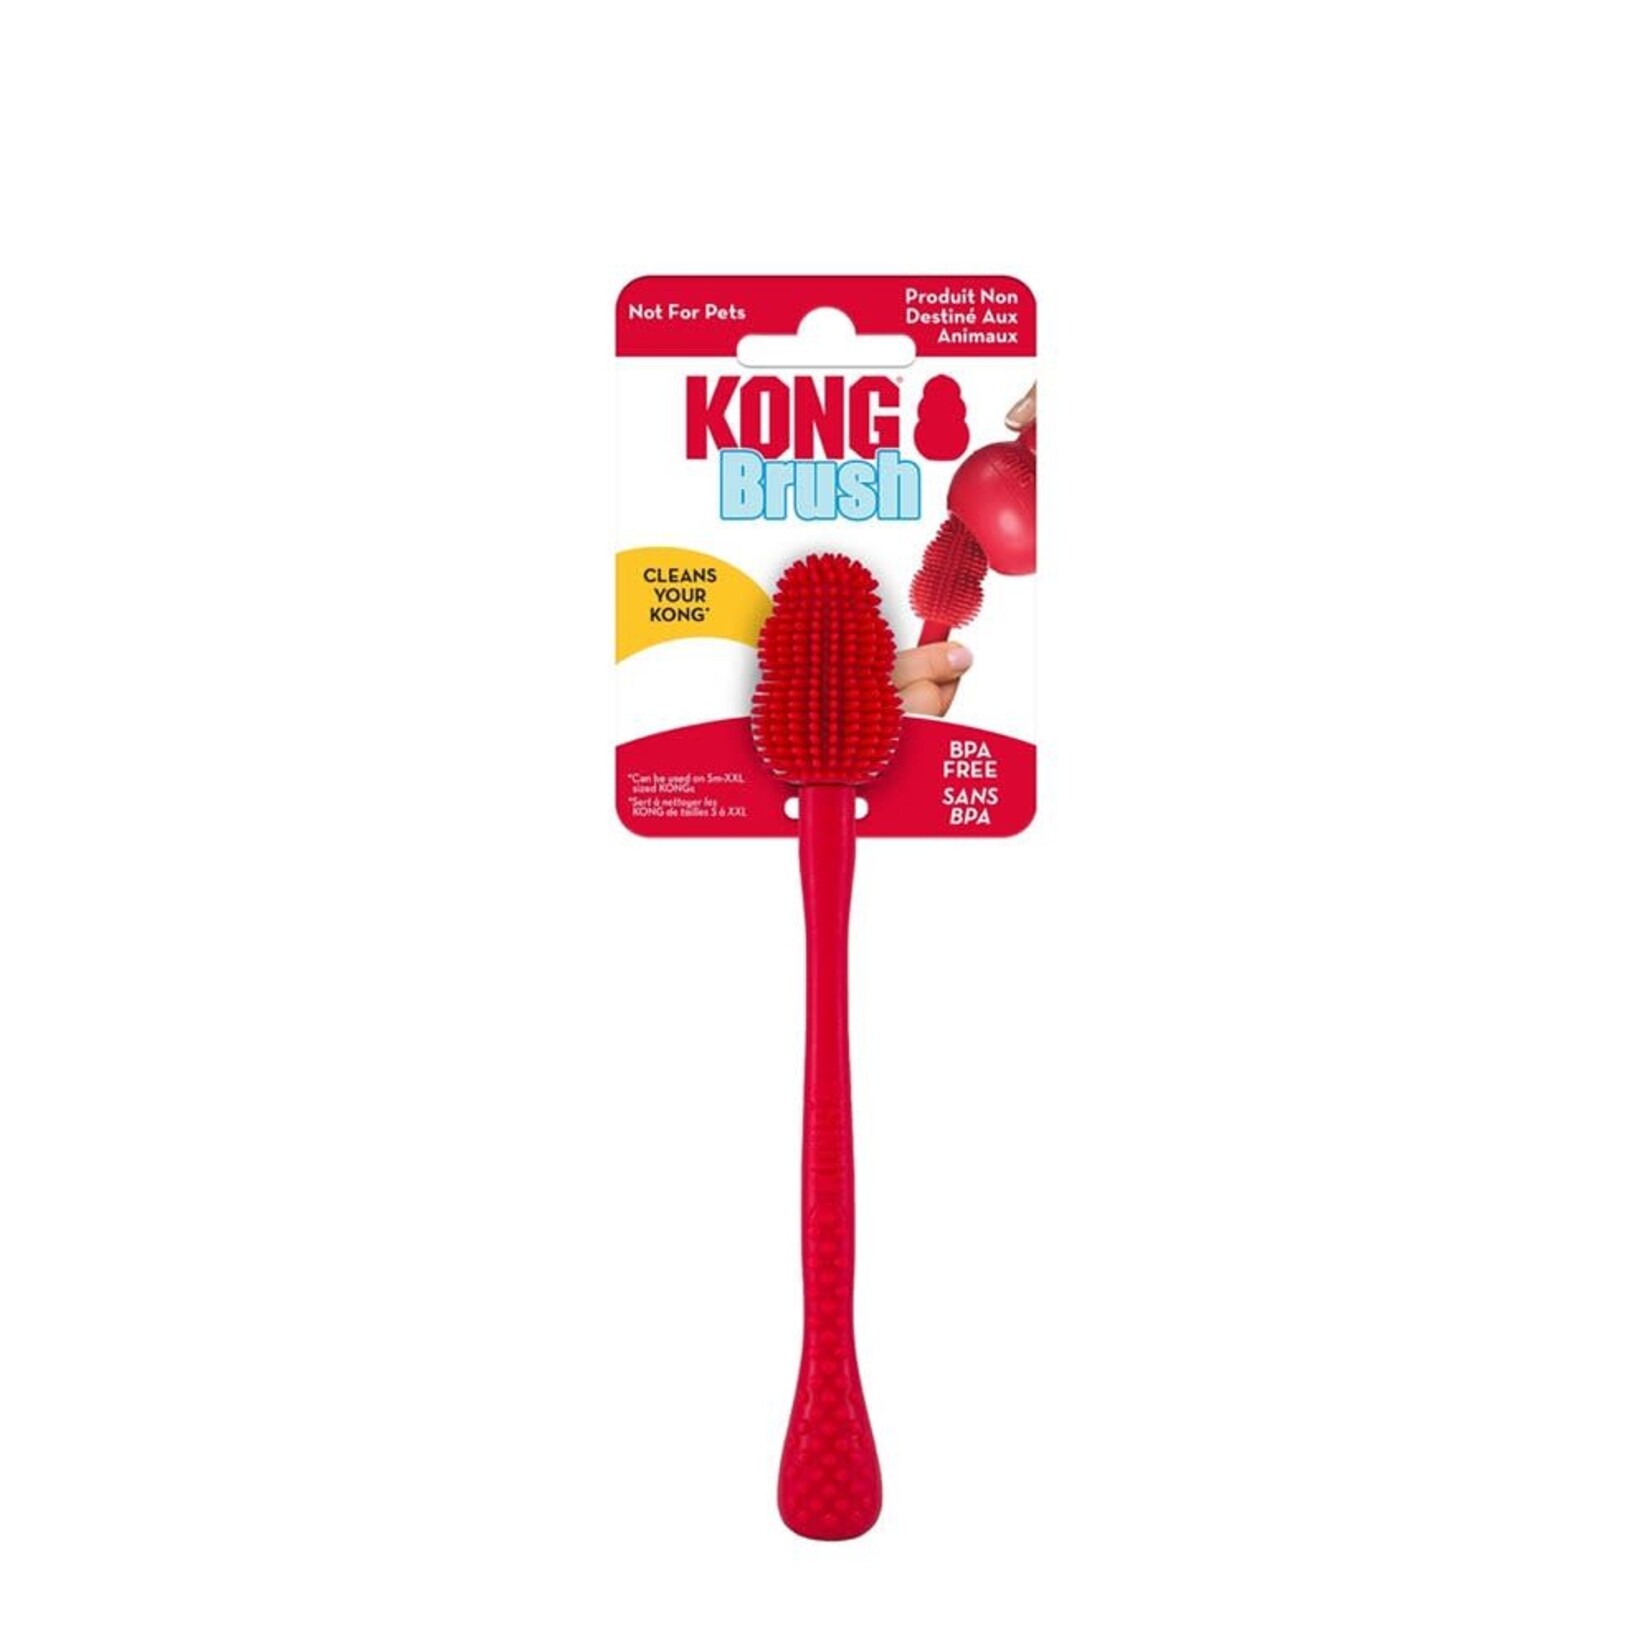 KONG Kong Cleaning Brush